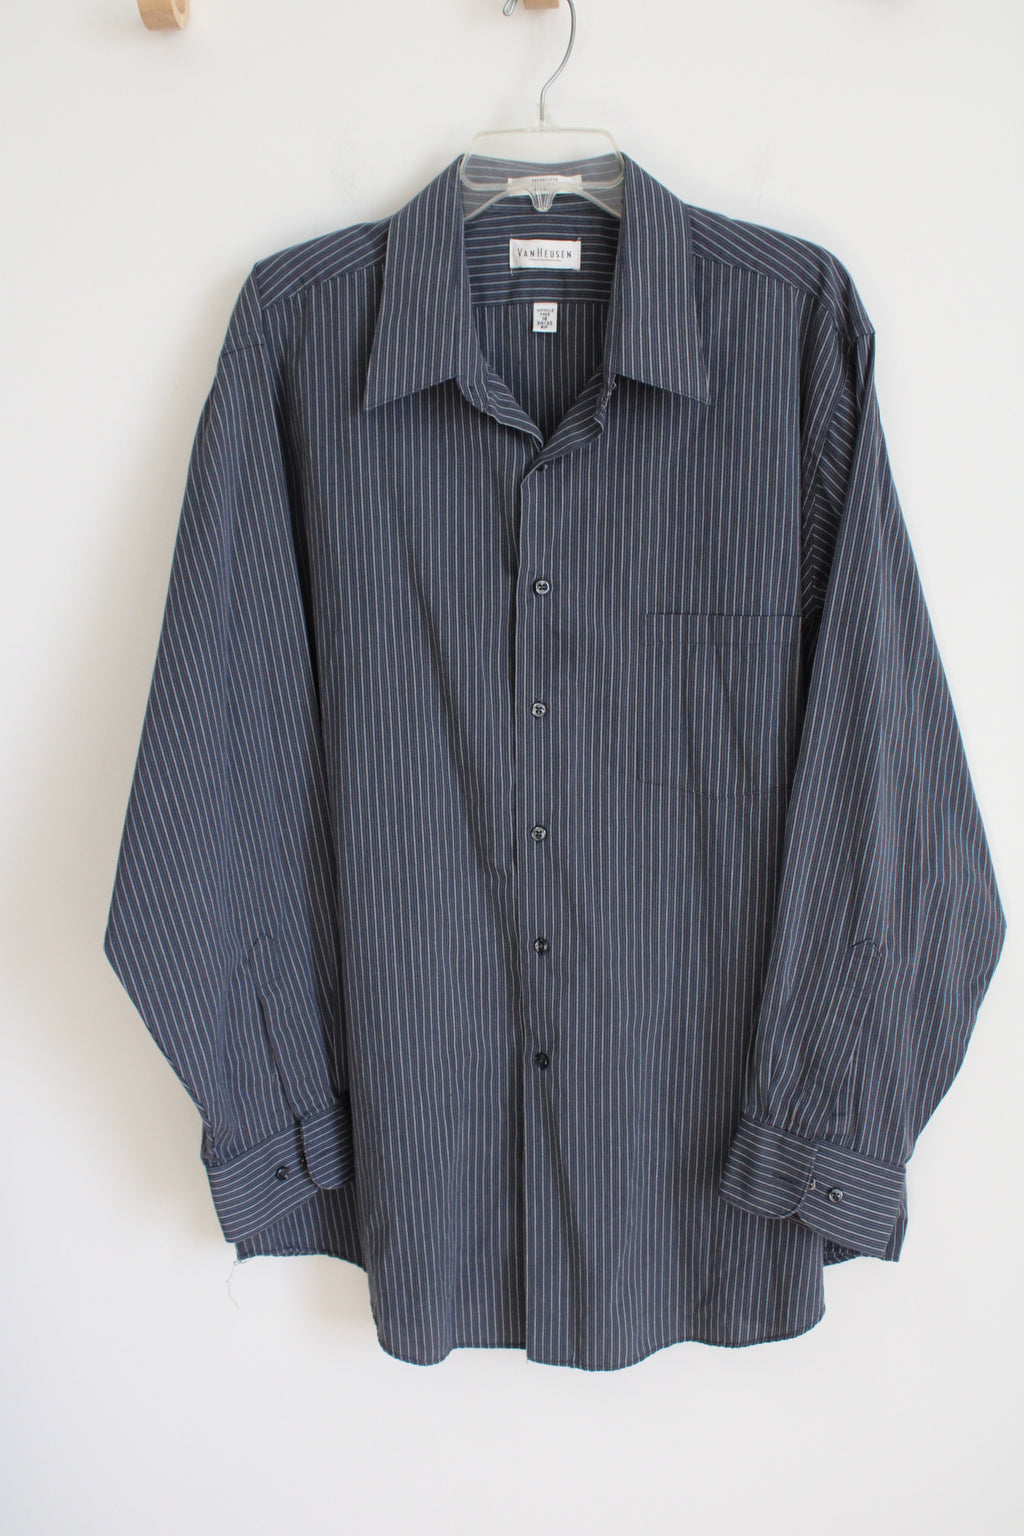 Van Heusen Broadcloth Blue Striped Button Down Shirt | 18 34/35 Big